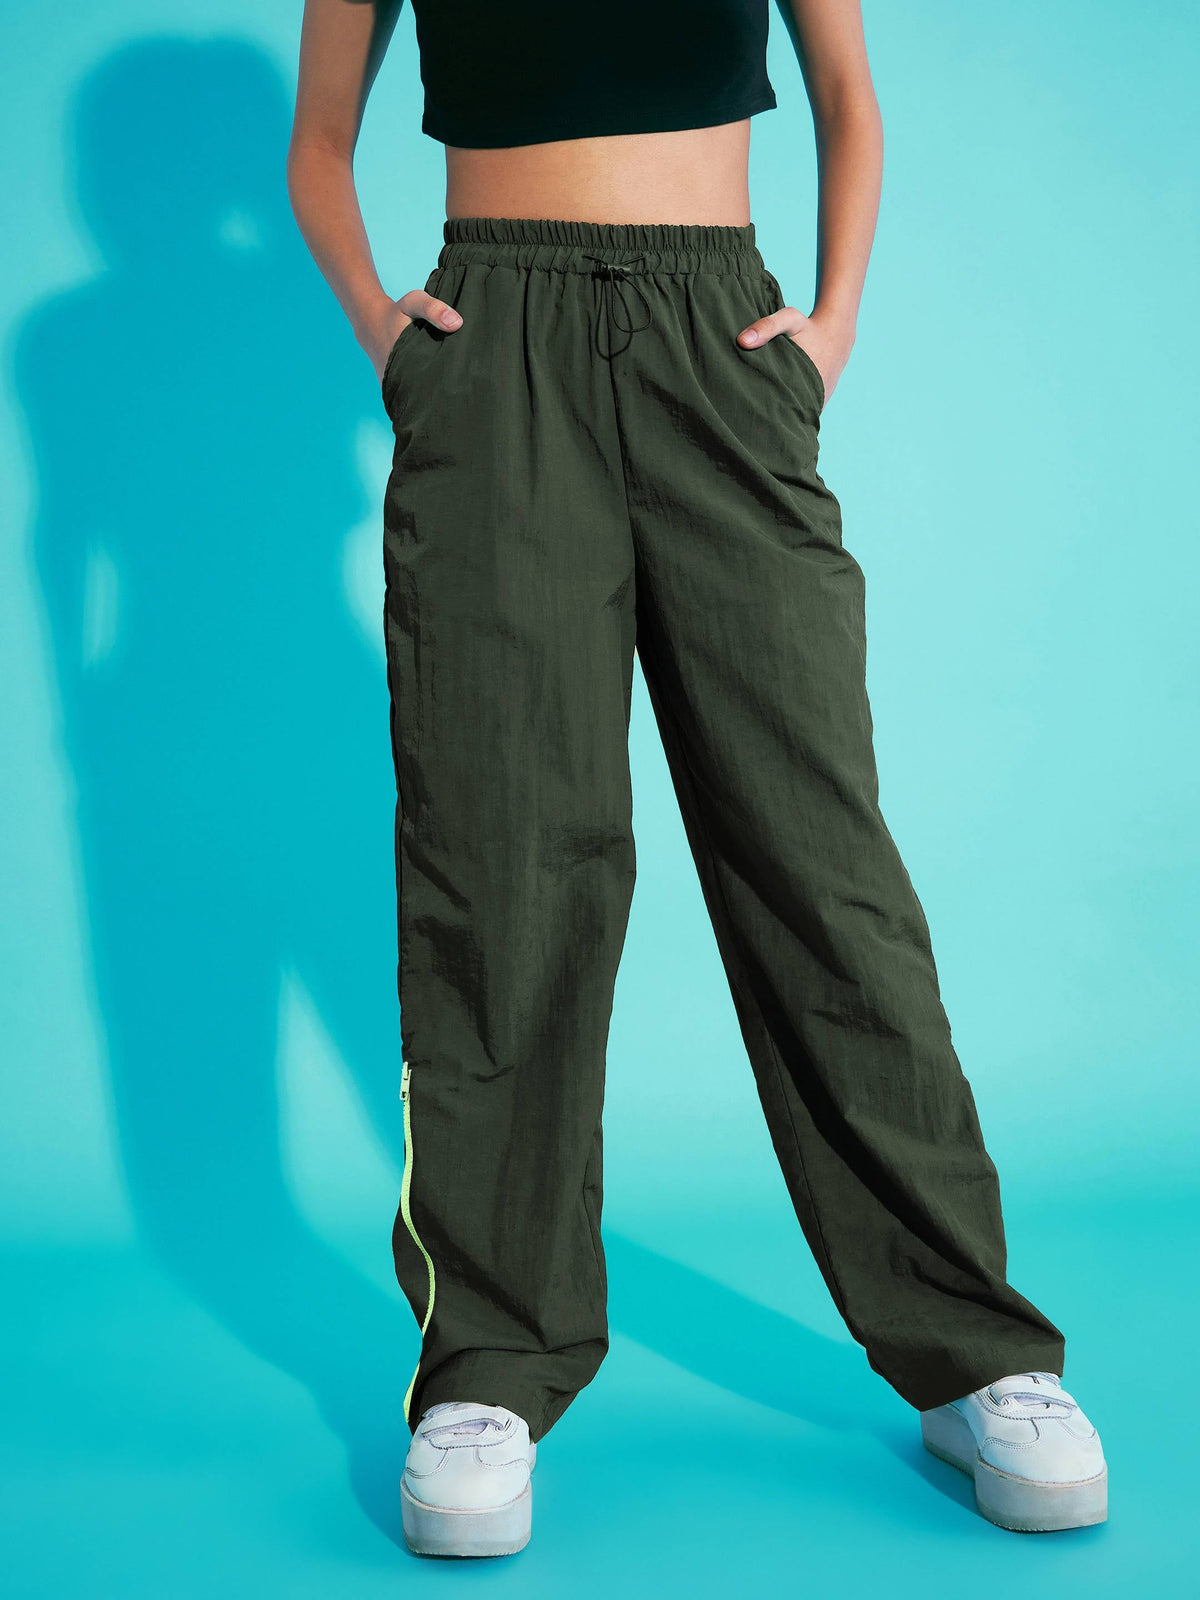 Green Out Seam Neon Zipper Cargo Parachute Pants-Noh.Voh